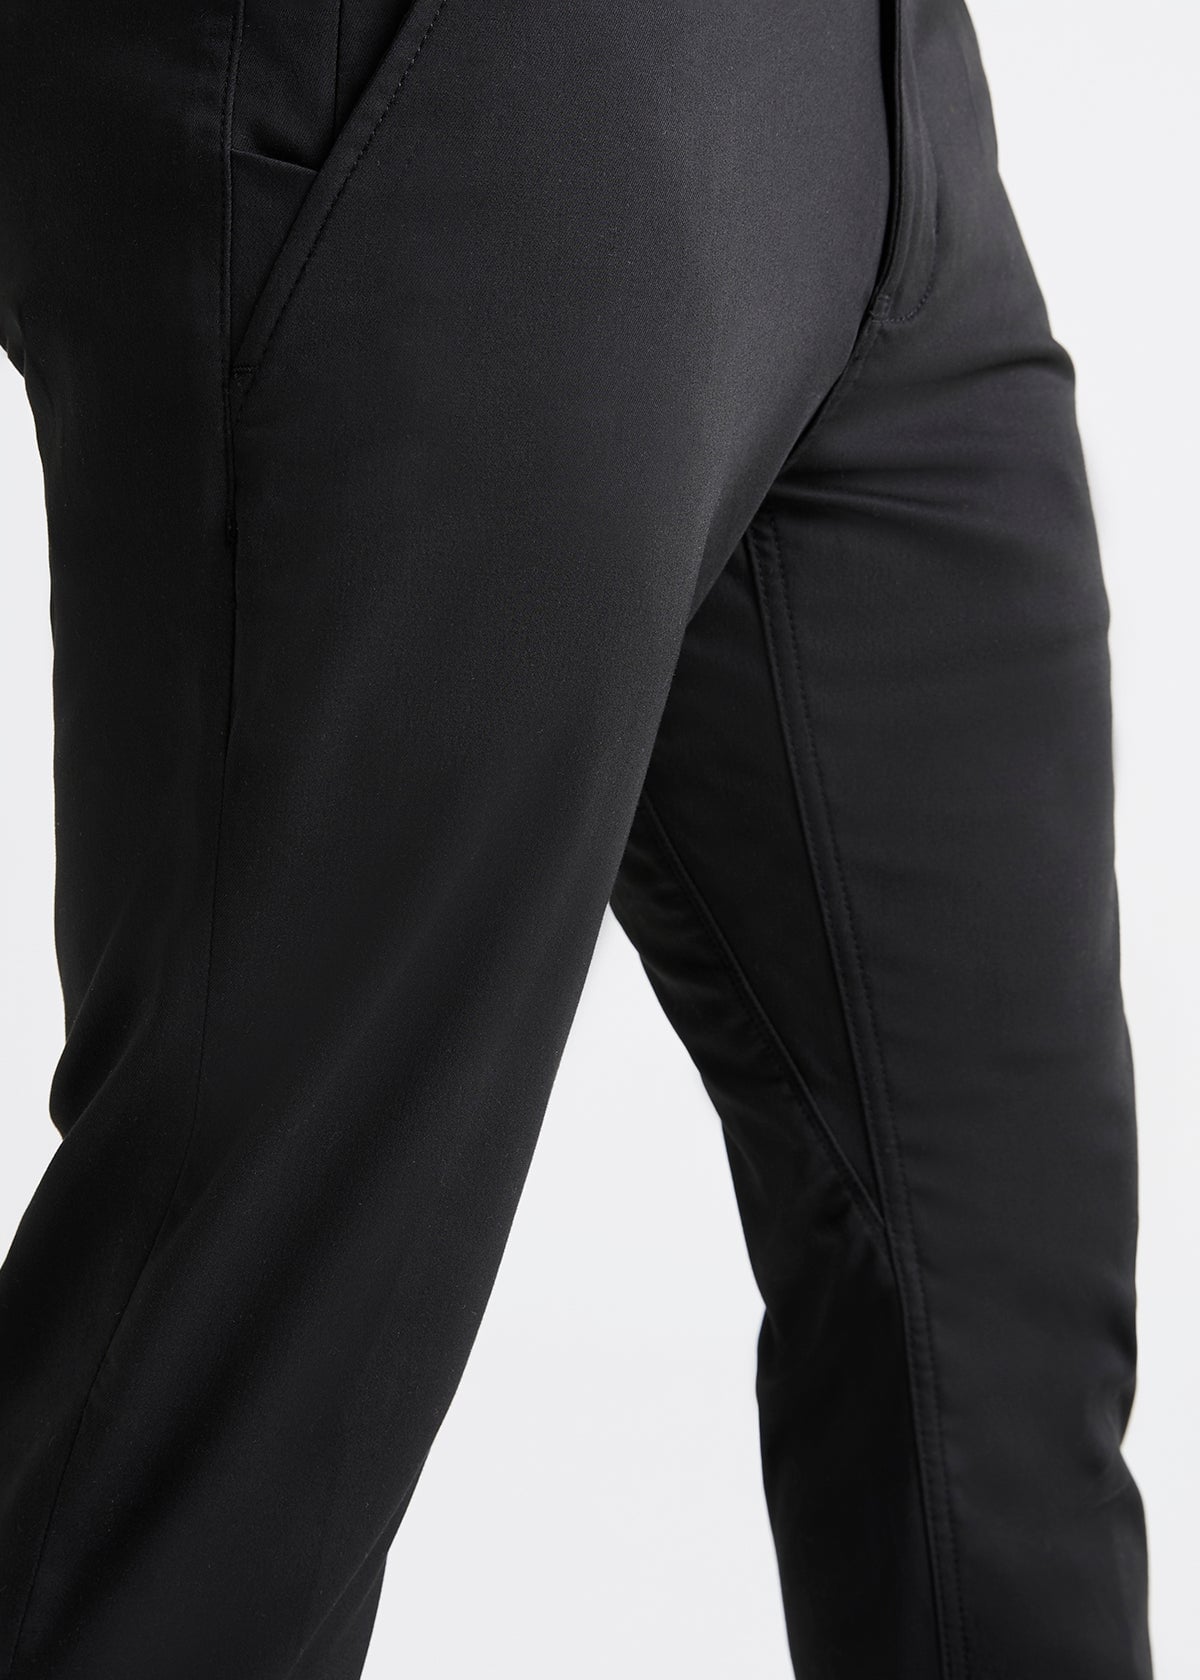 Premium Performance Black Stretch Pants